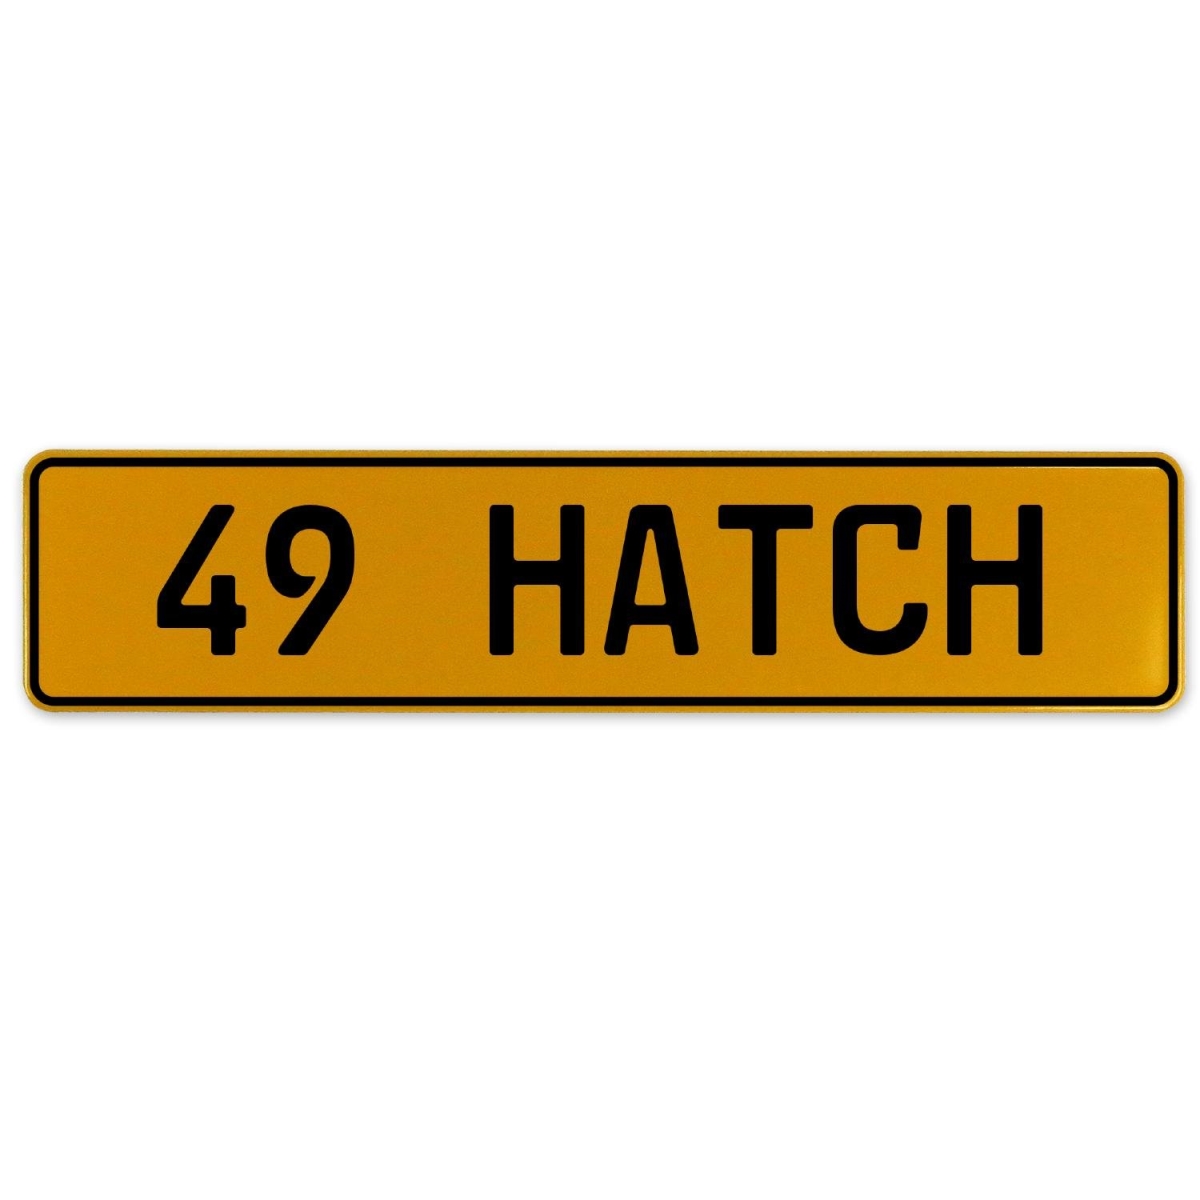 49 Hatch - Yellow Aluminum Street Sign Mancave Euro Plate Name Door Sign Wall